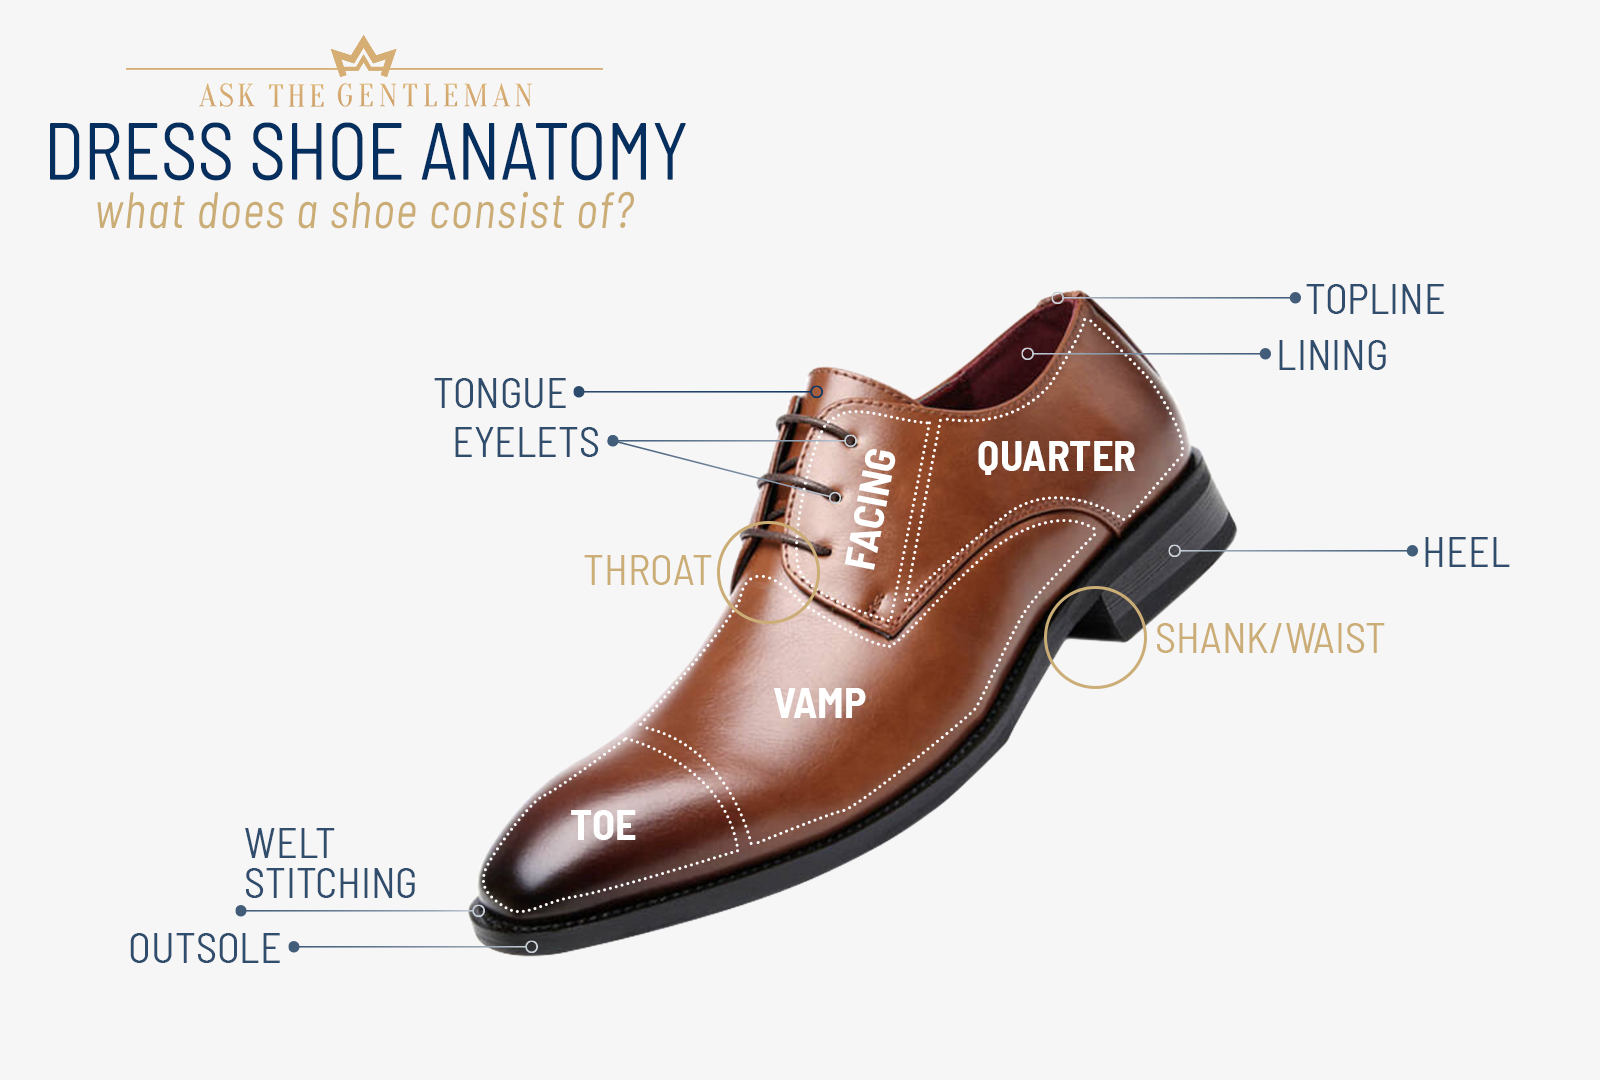 The anatomy of the dress shoe